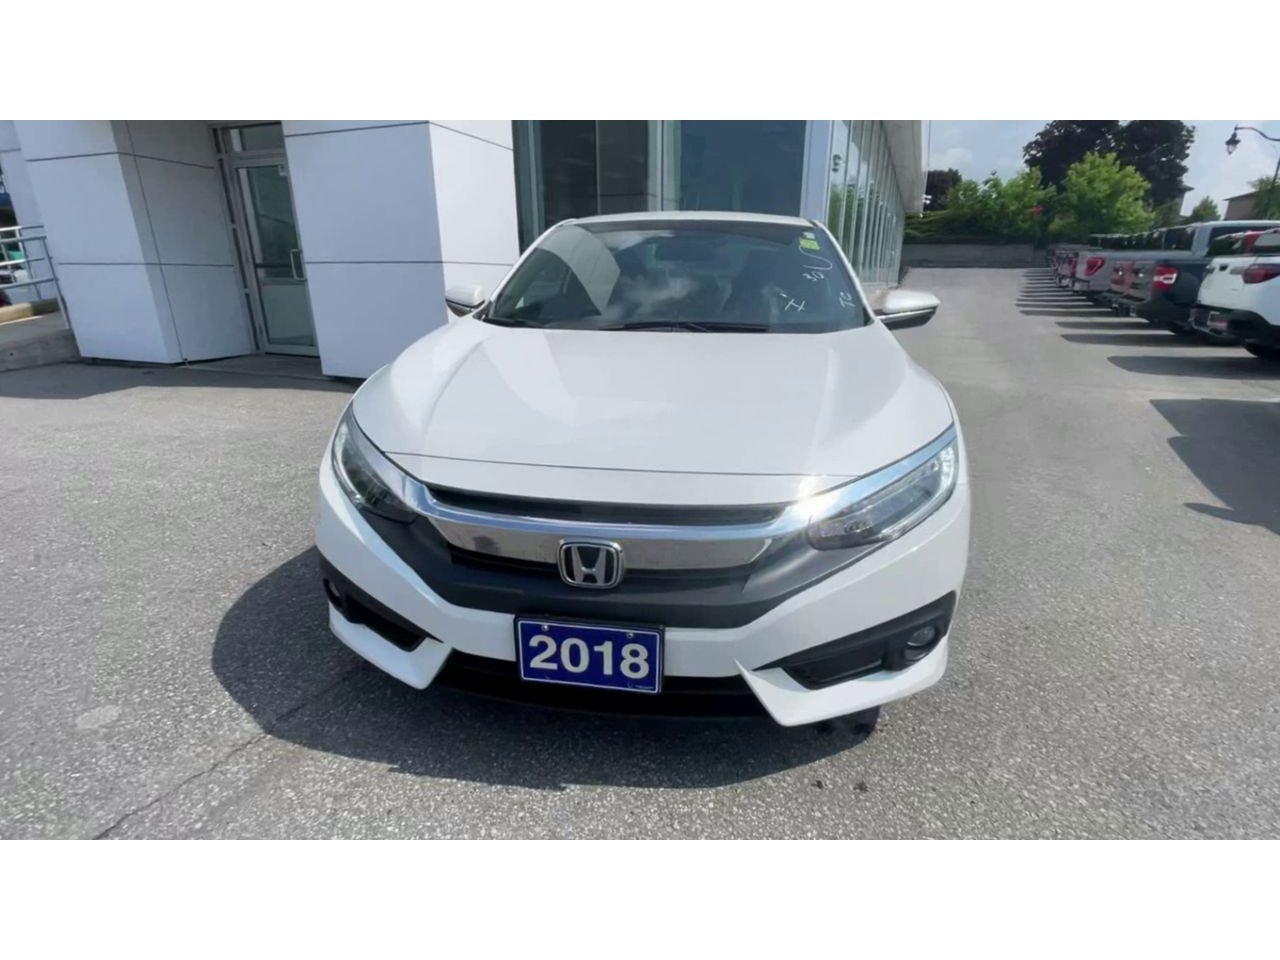 2018 Honda Civic Coupe - P21114 Full Image 3